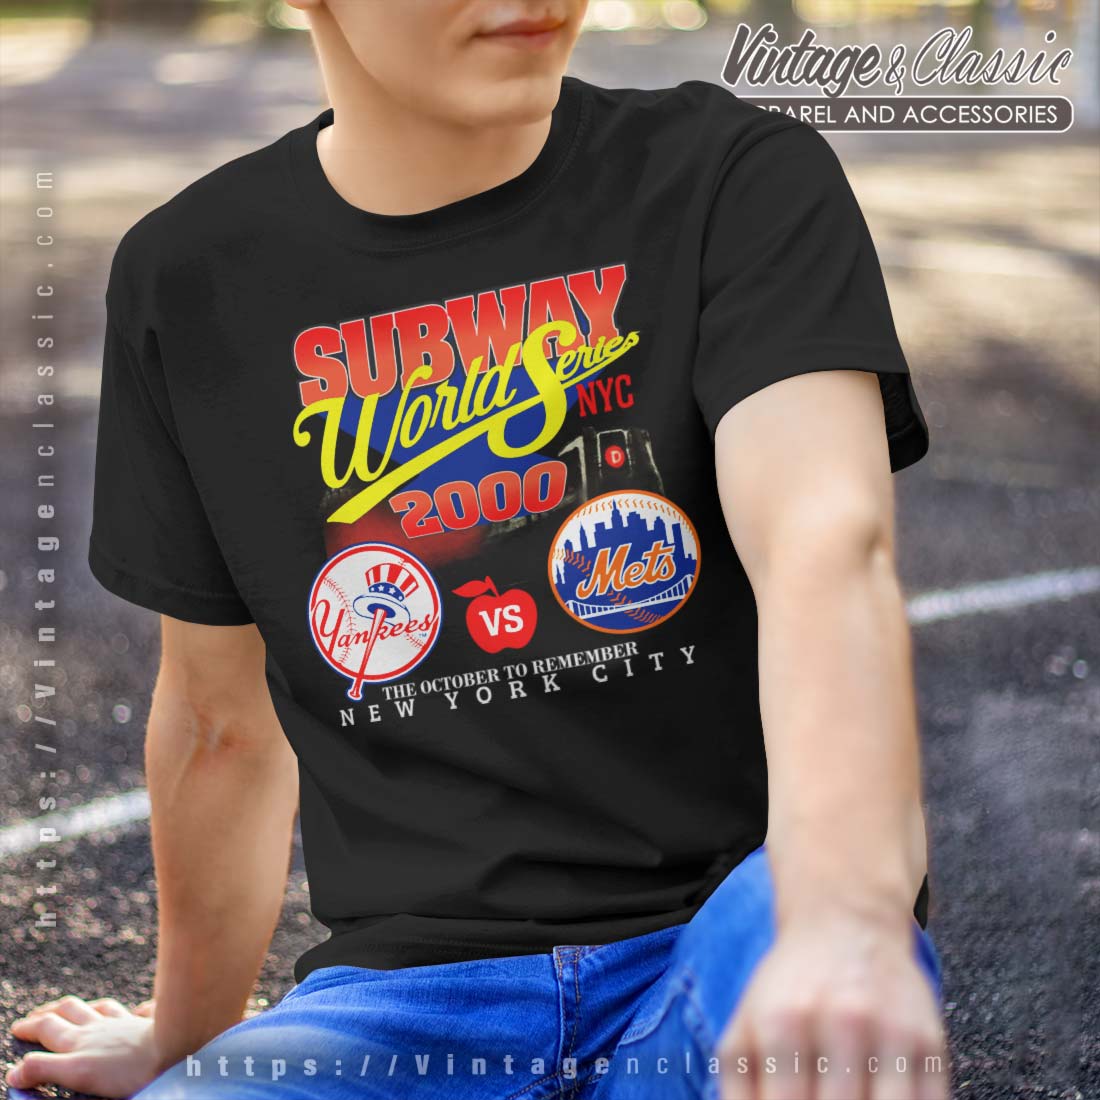 Ny Yankees Vs Mets Subway World Series Shirt - High-Quality Printed Brand